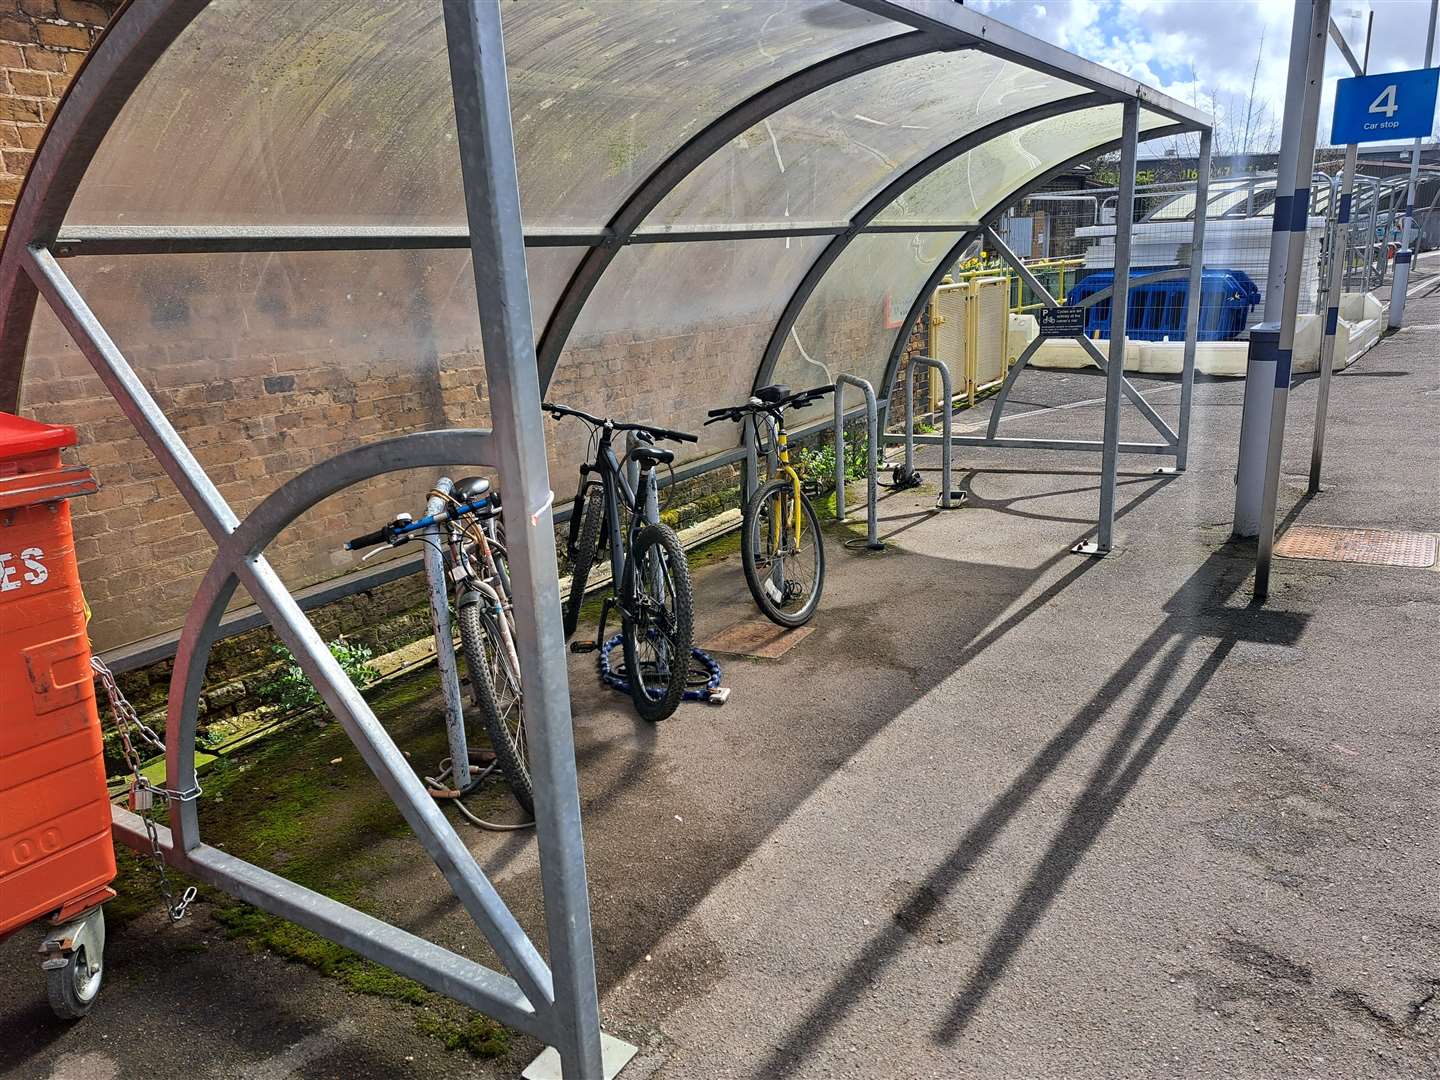 The bike racks at Maidstone West Station